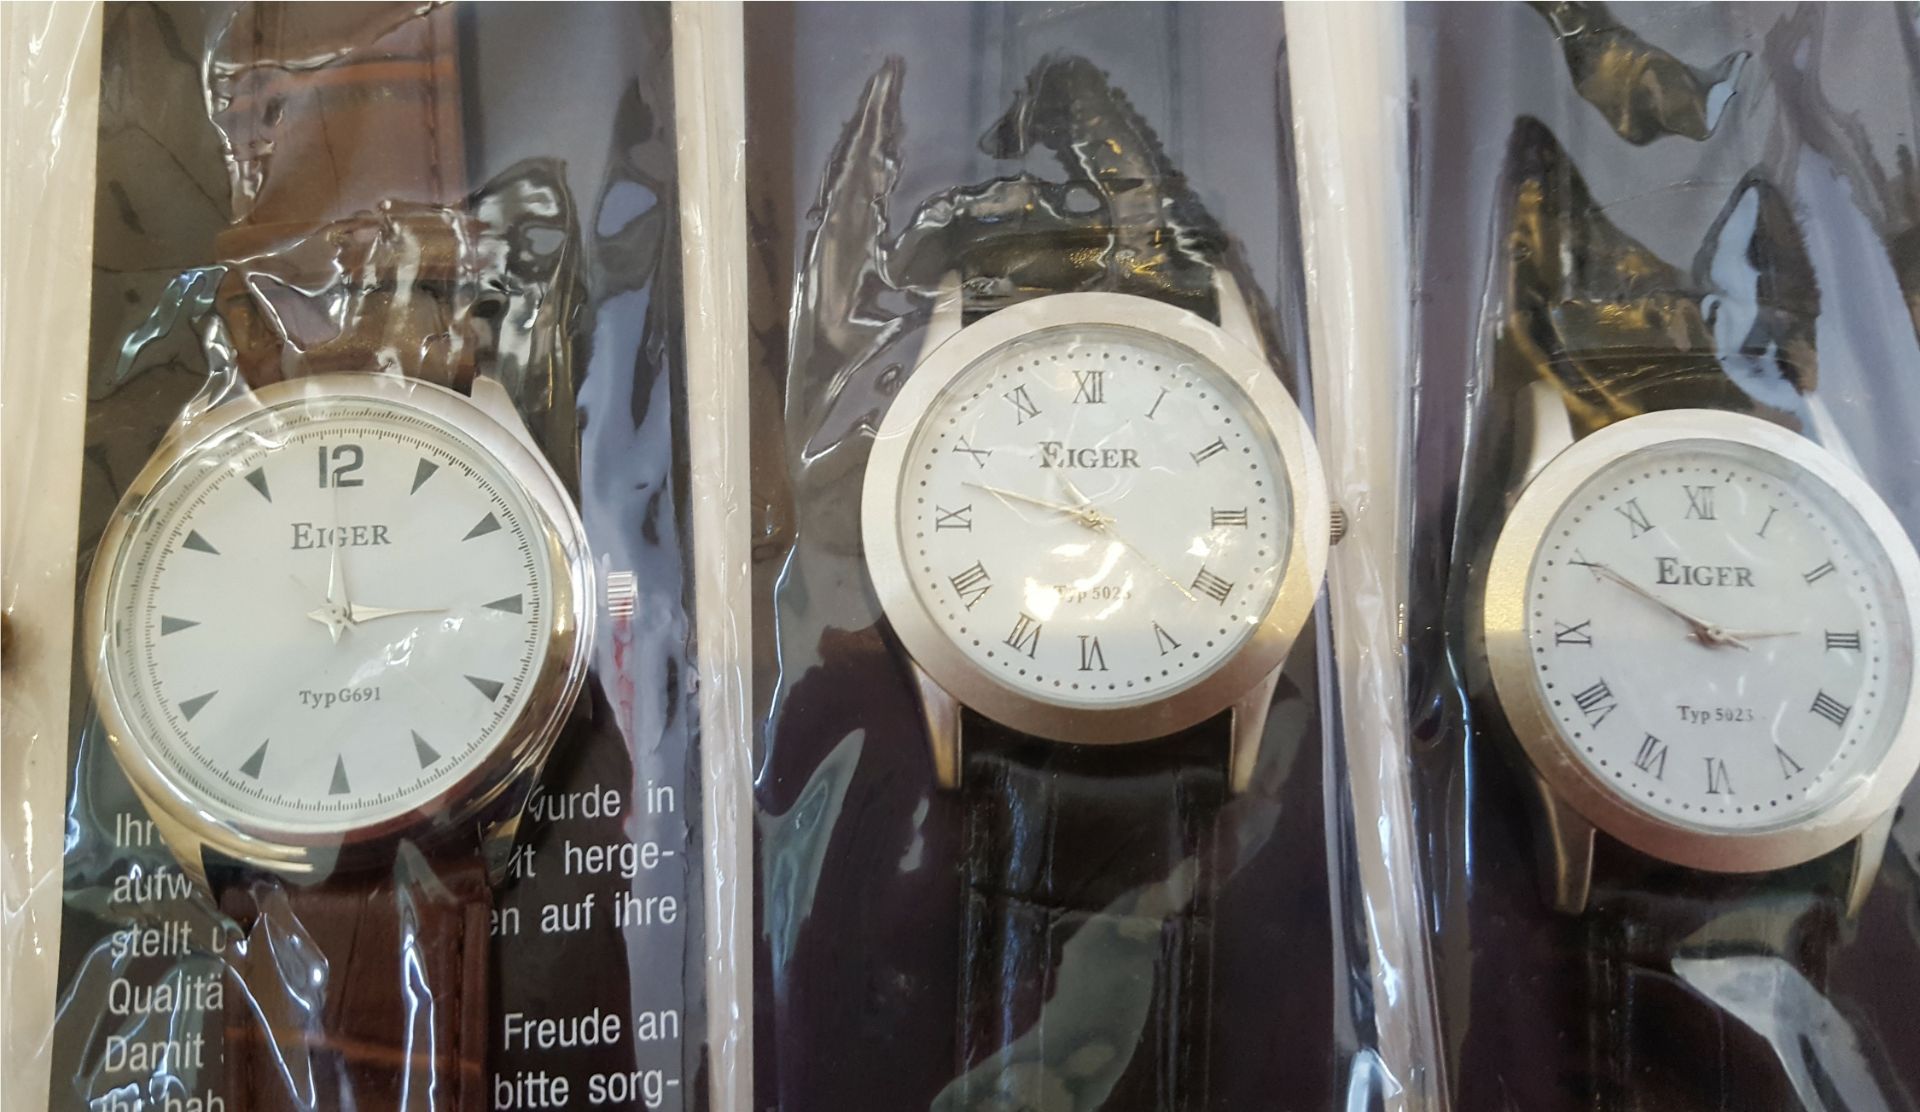 Vintage Wrist Watches 1 x Carvel 17 Jewels 3 x Eiger & 1 x Limit - Image 3 of 4